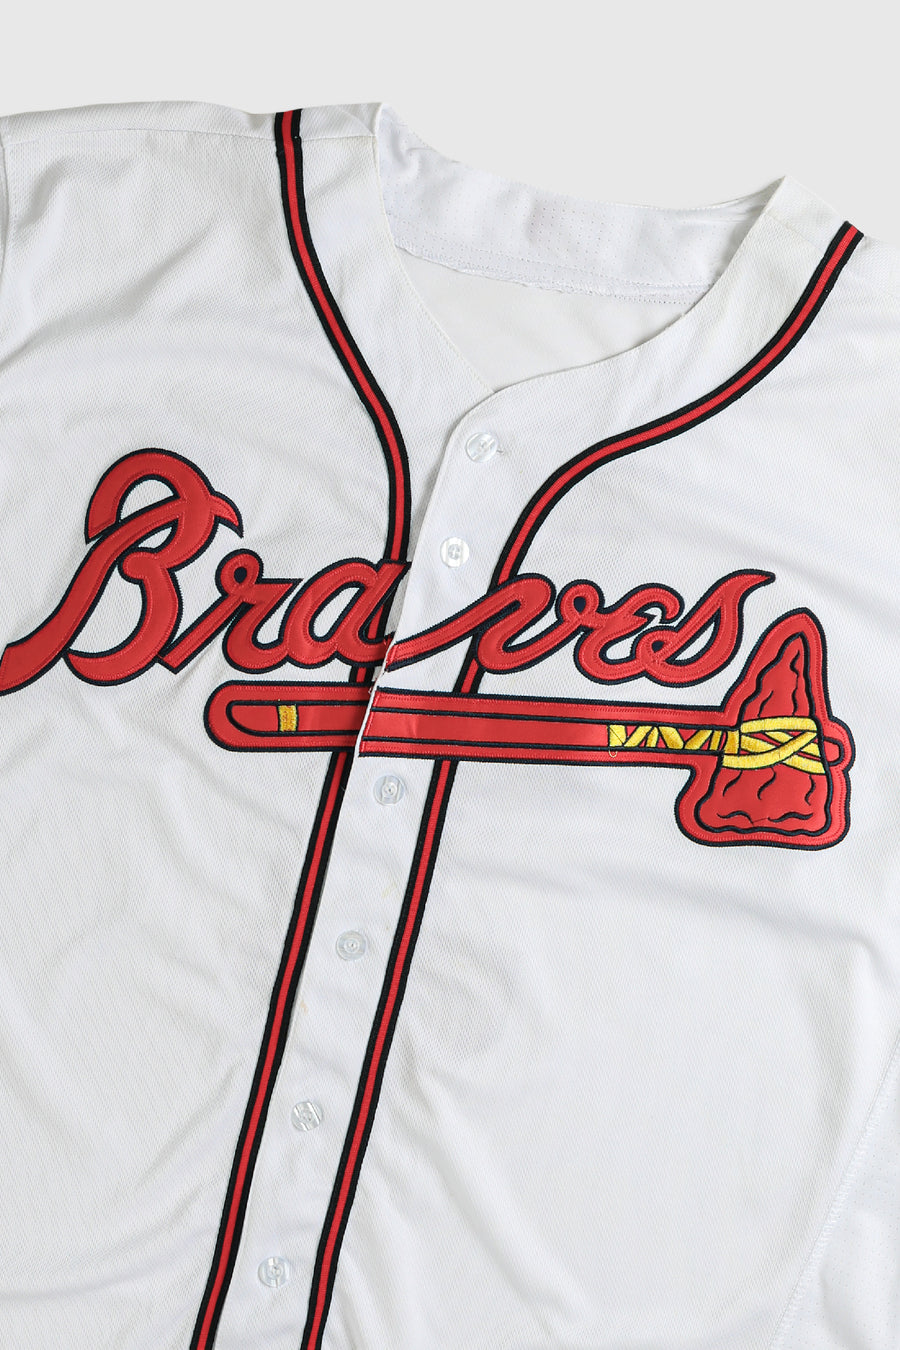 Vintage Braves Baseball Jersey